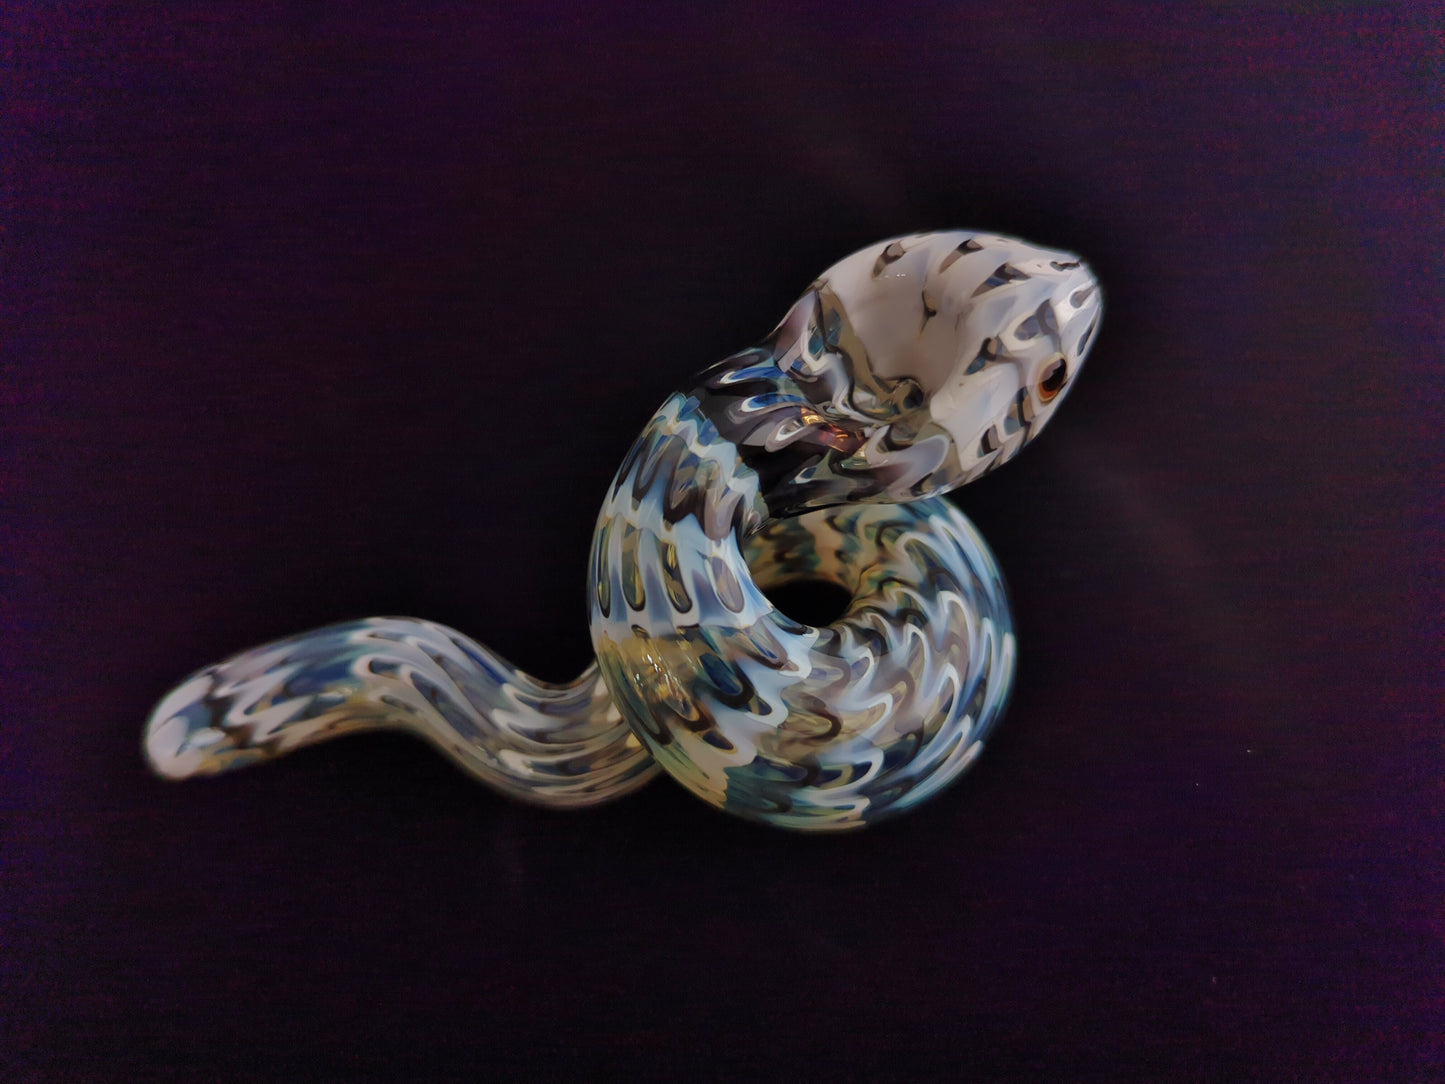 Coiled Glass Snake Pipe - Black & White